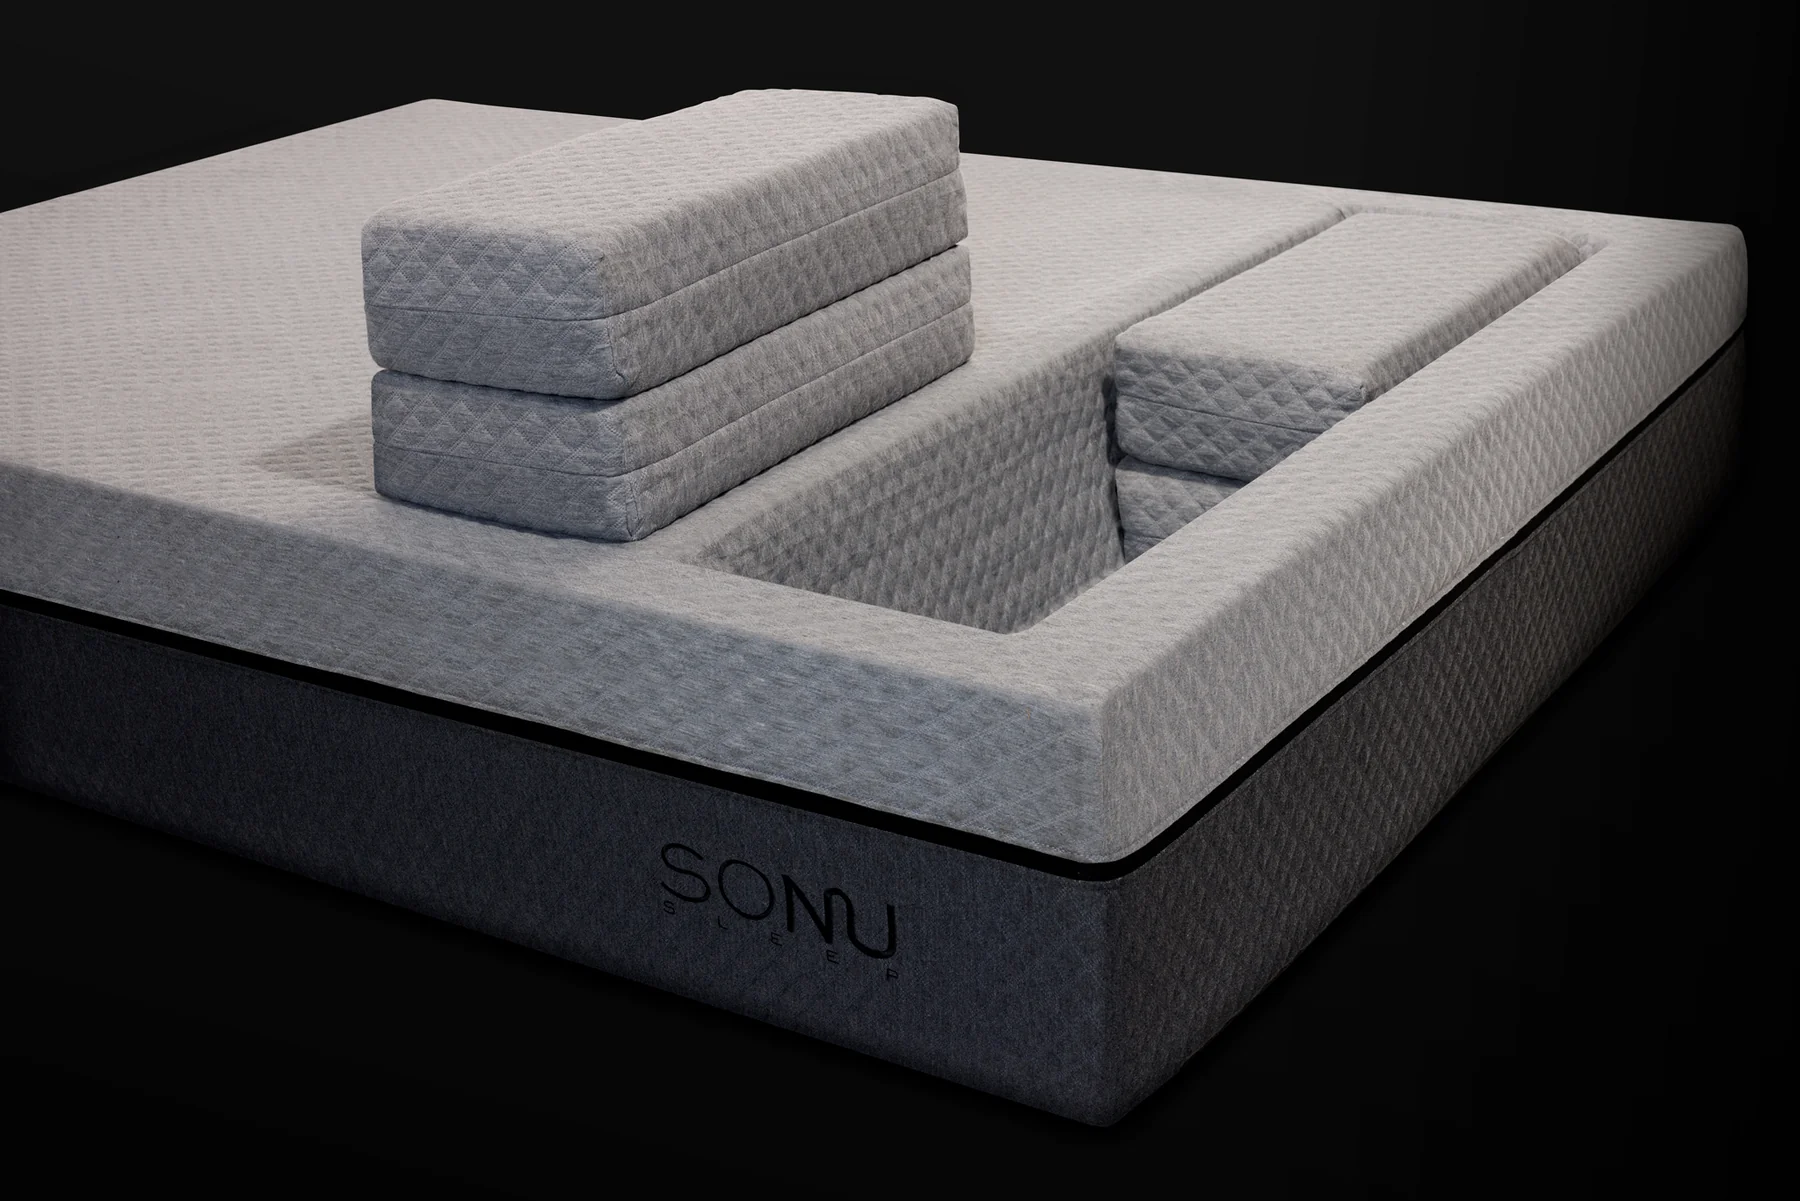 SONU Sleep System